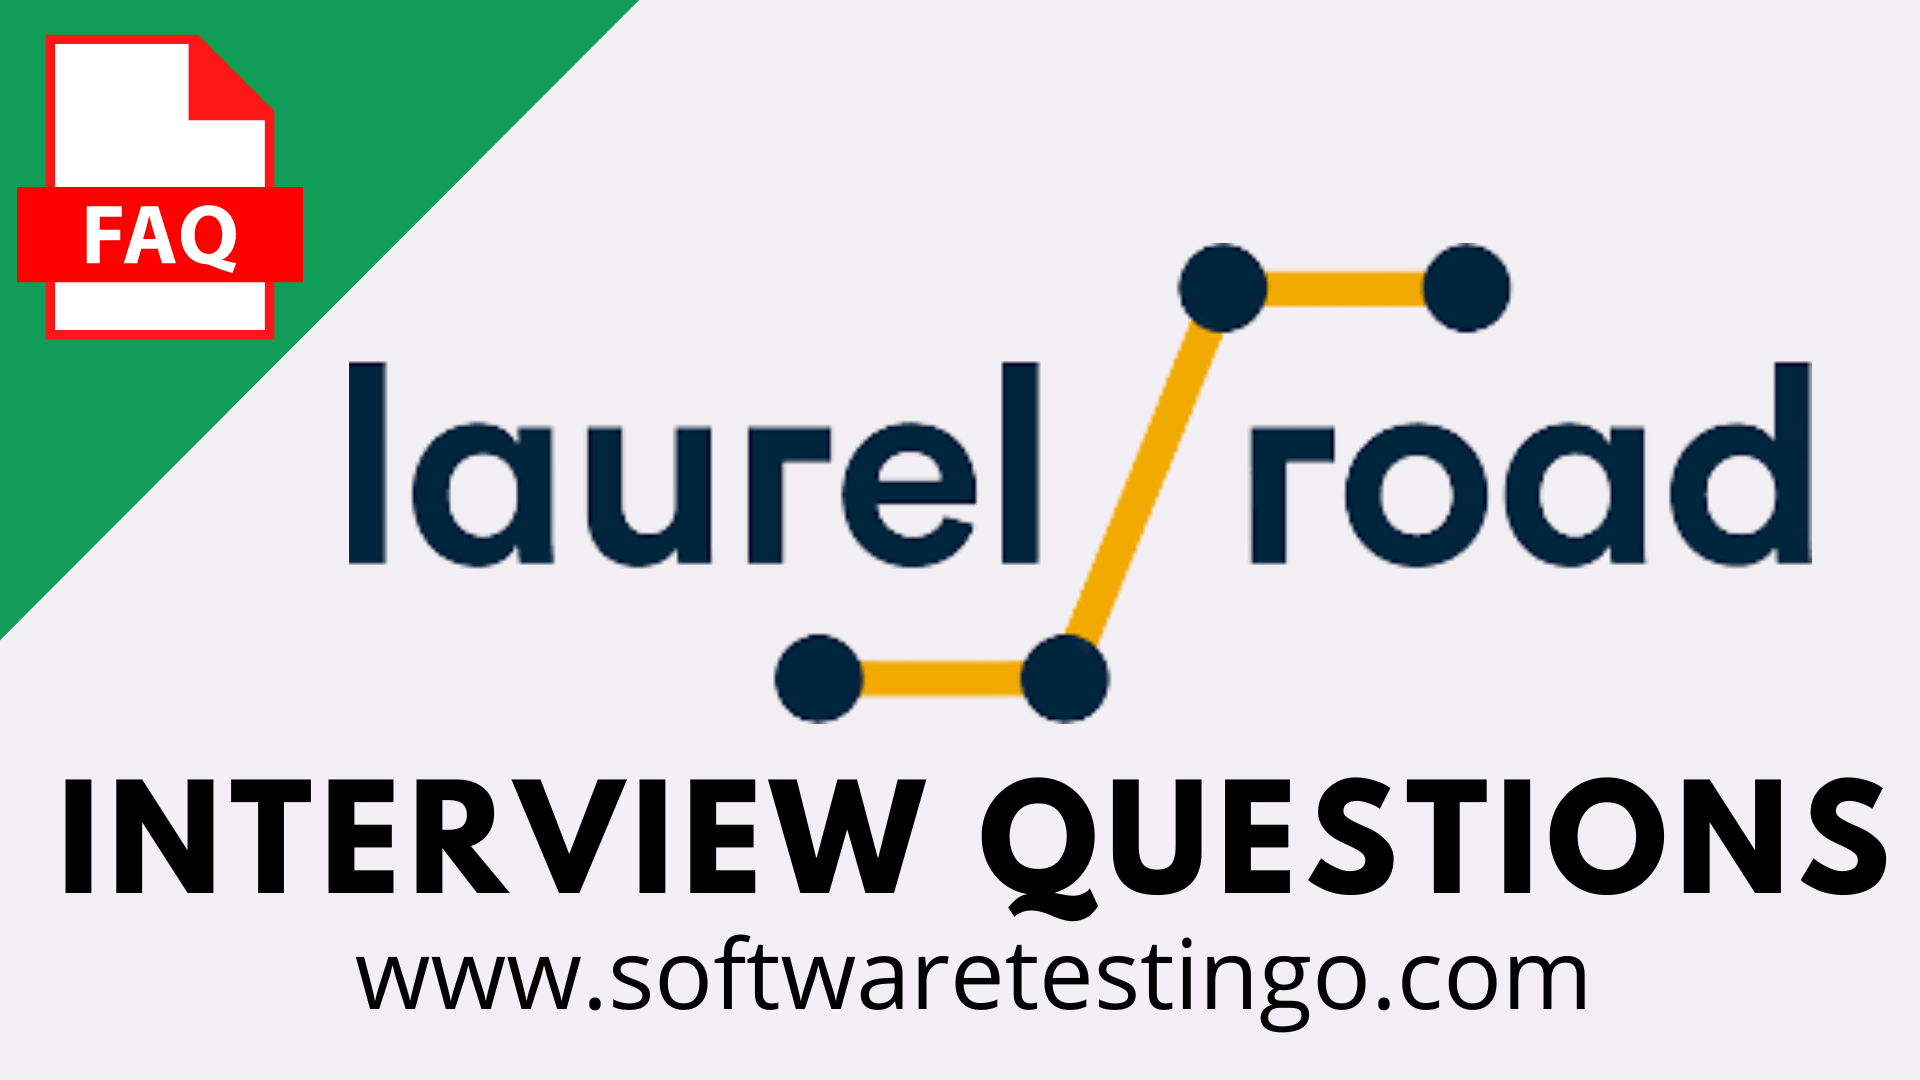 Laurel Road Interview Questions